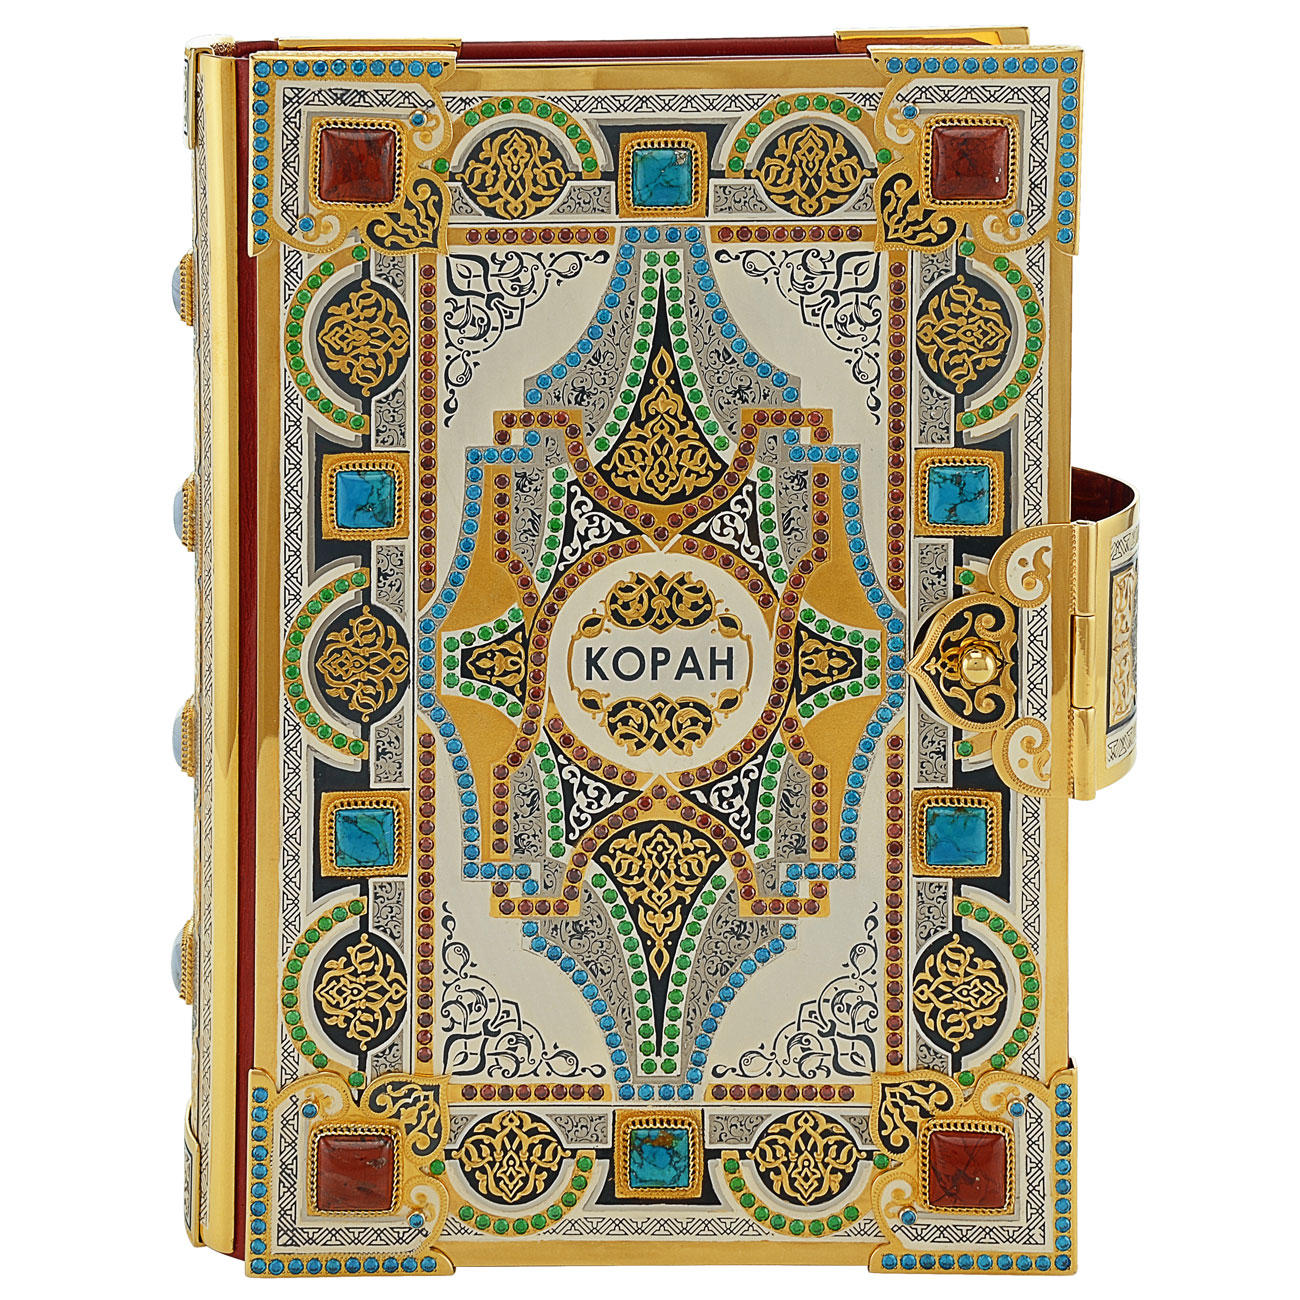 Религиозная книга "Коран" на русском языке (Златоуст) - артикул: 310620 | Мосподарок 